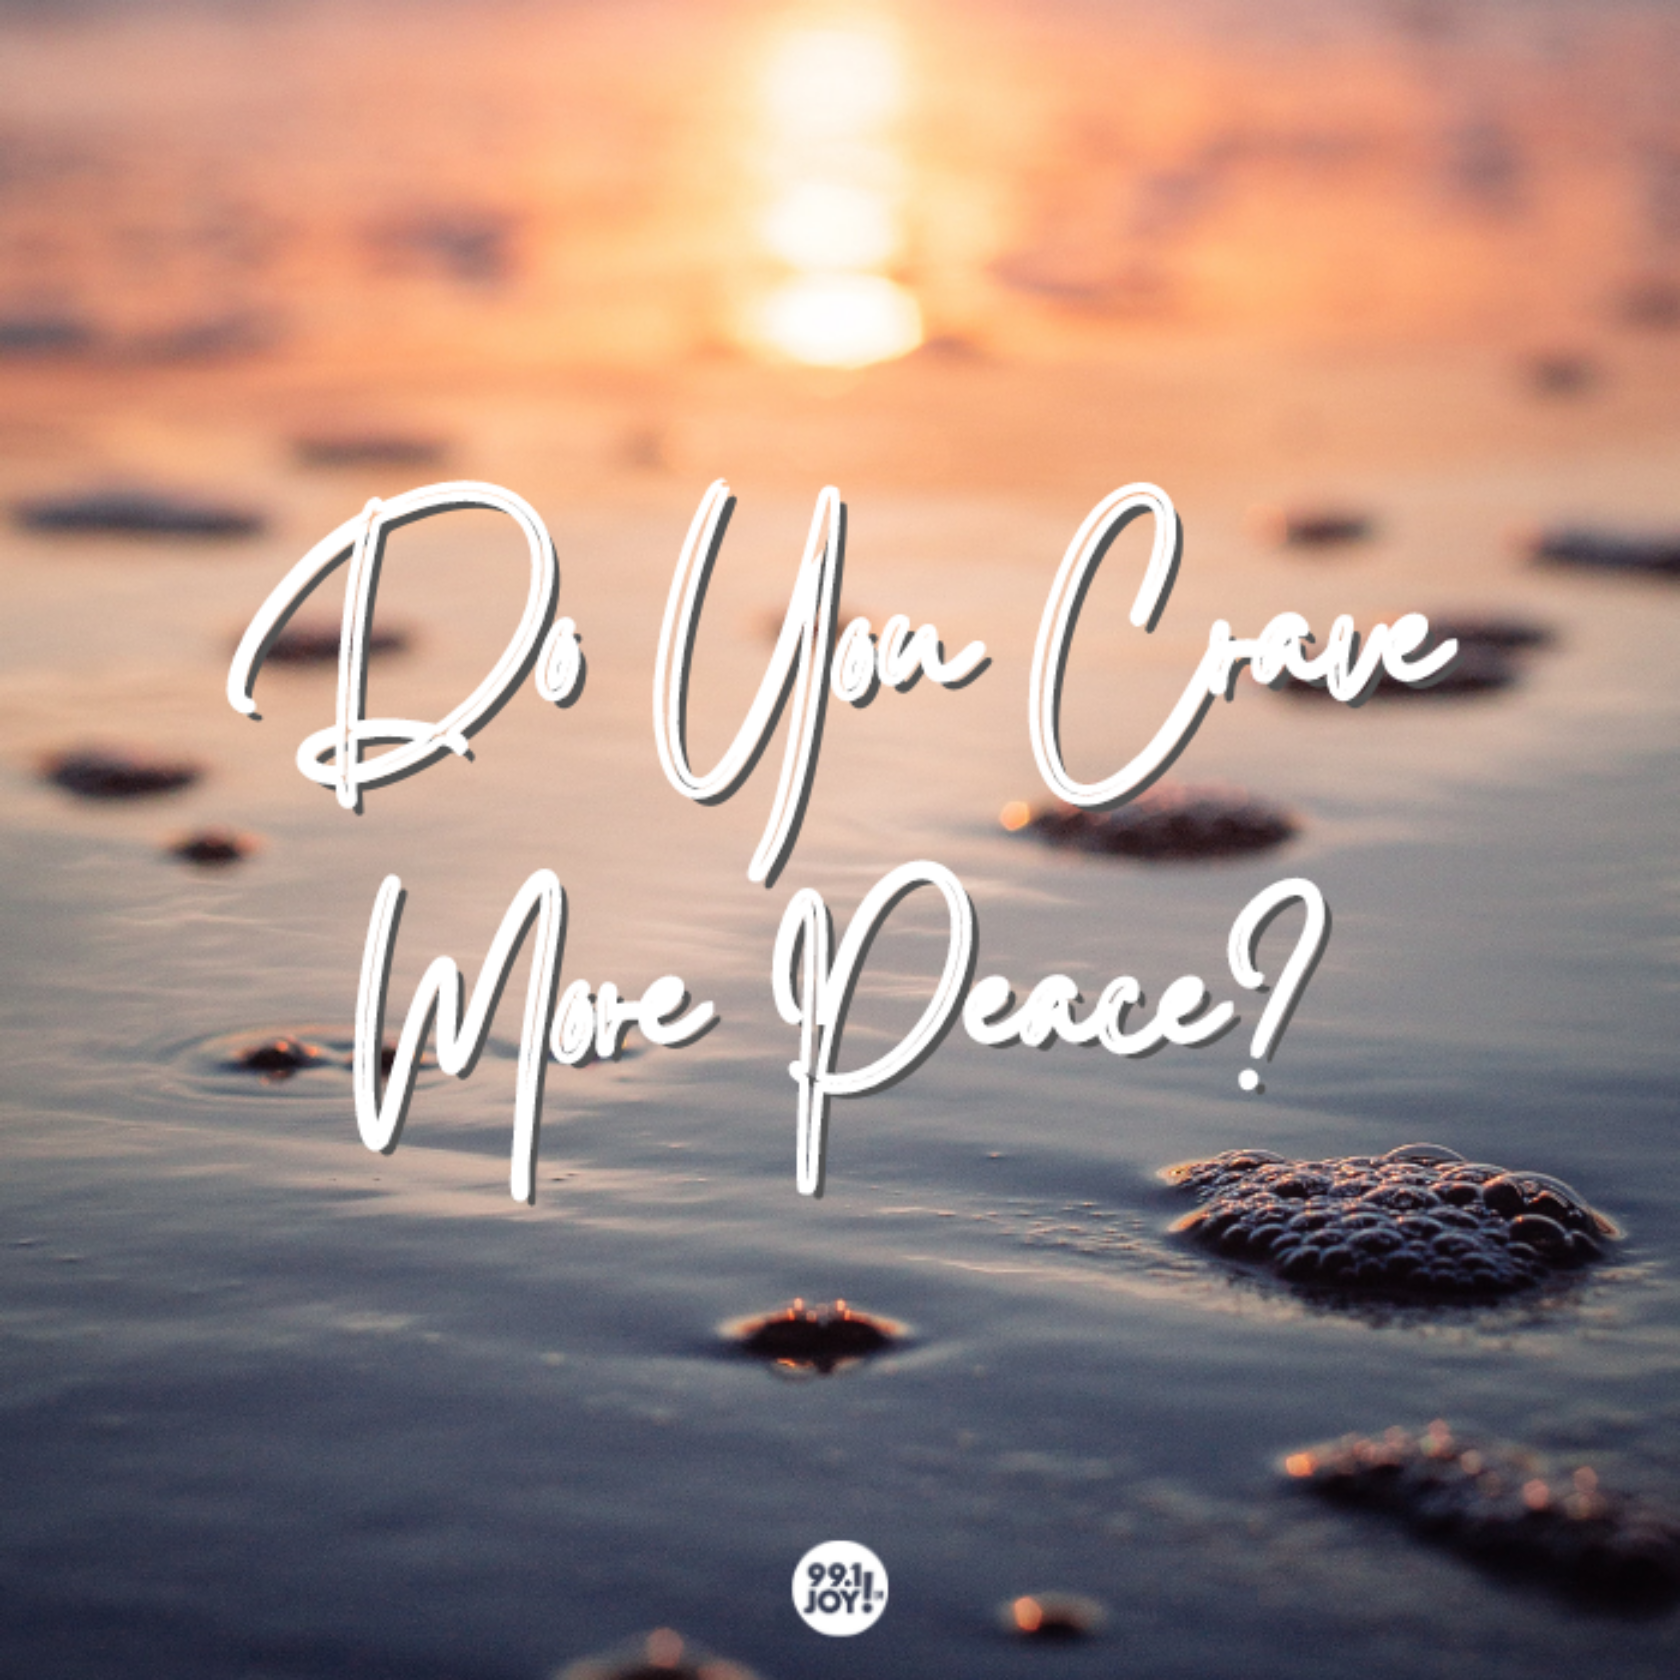 Do You Crave More Peace?